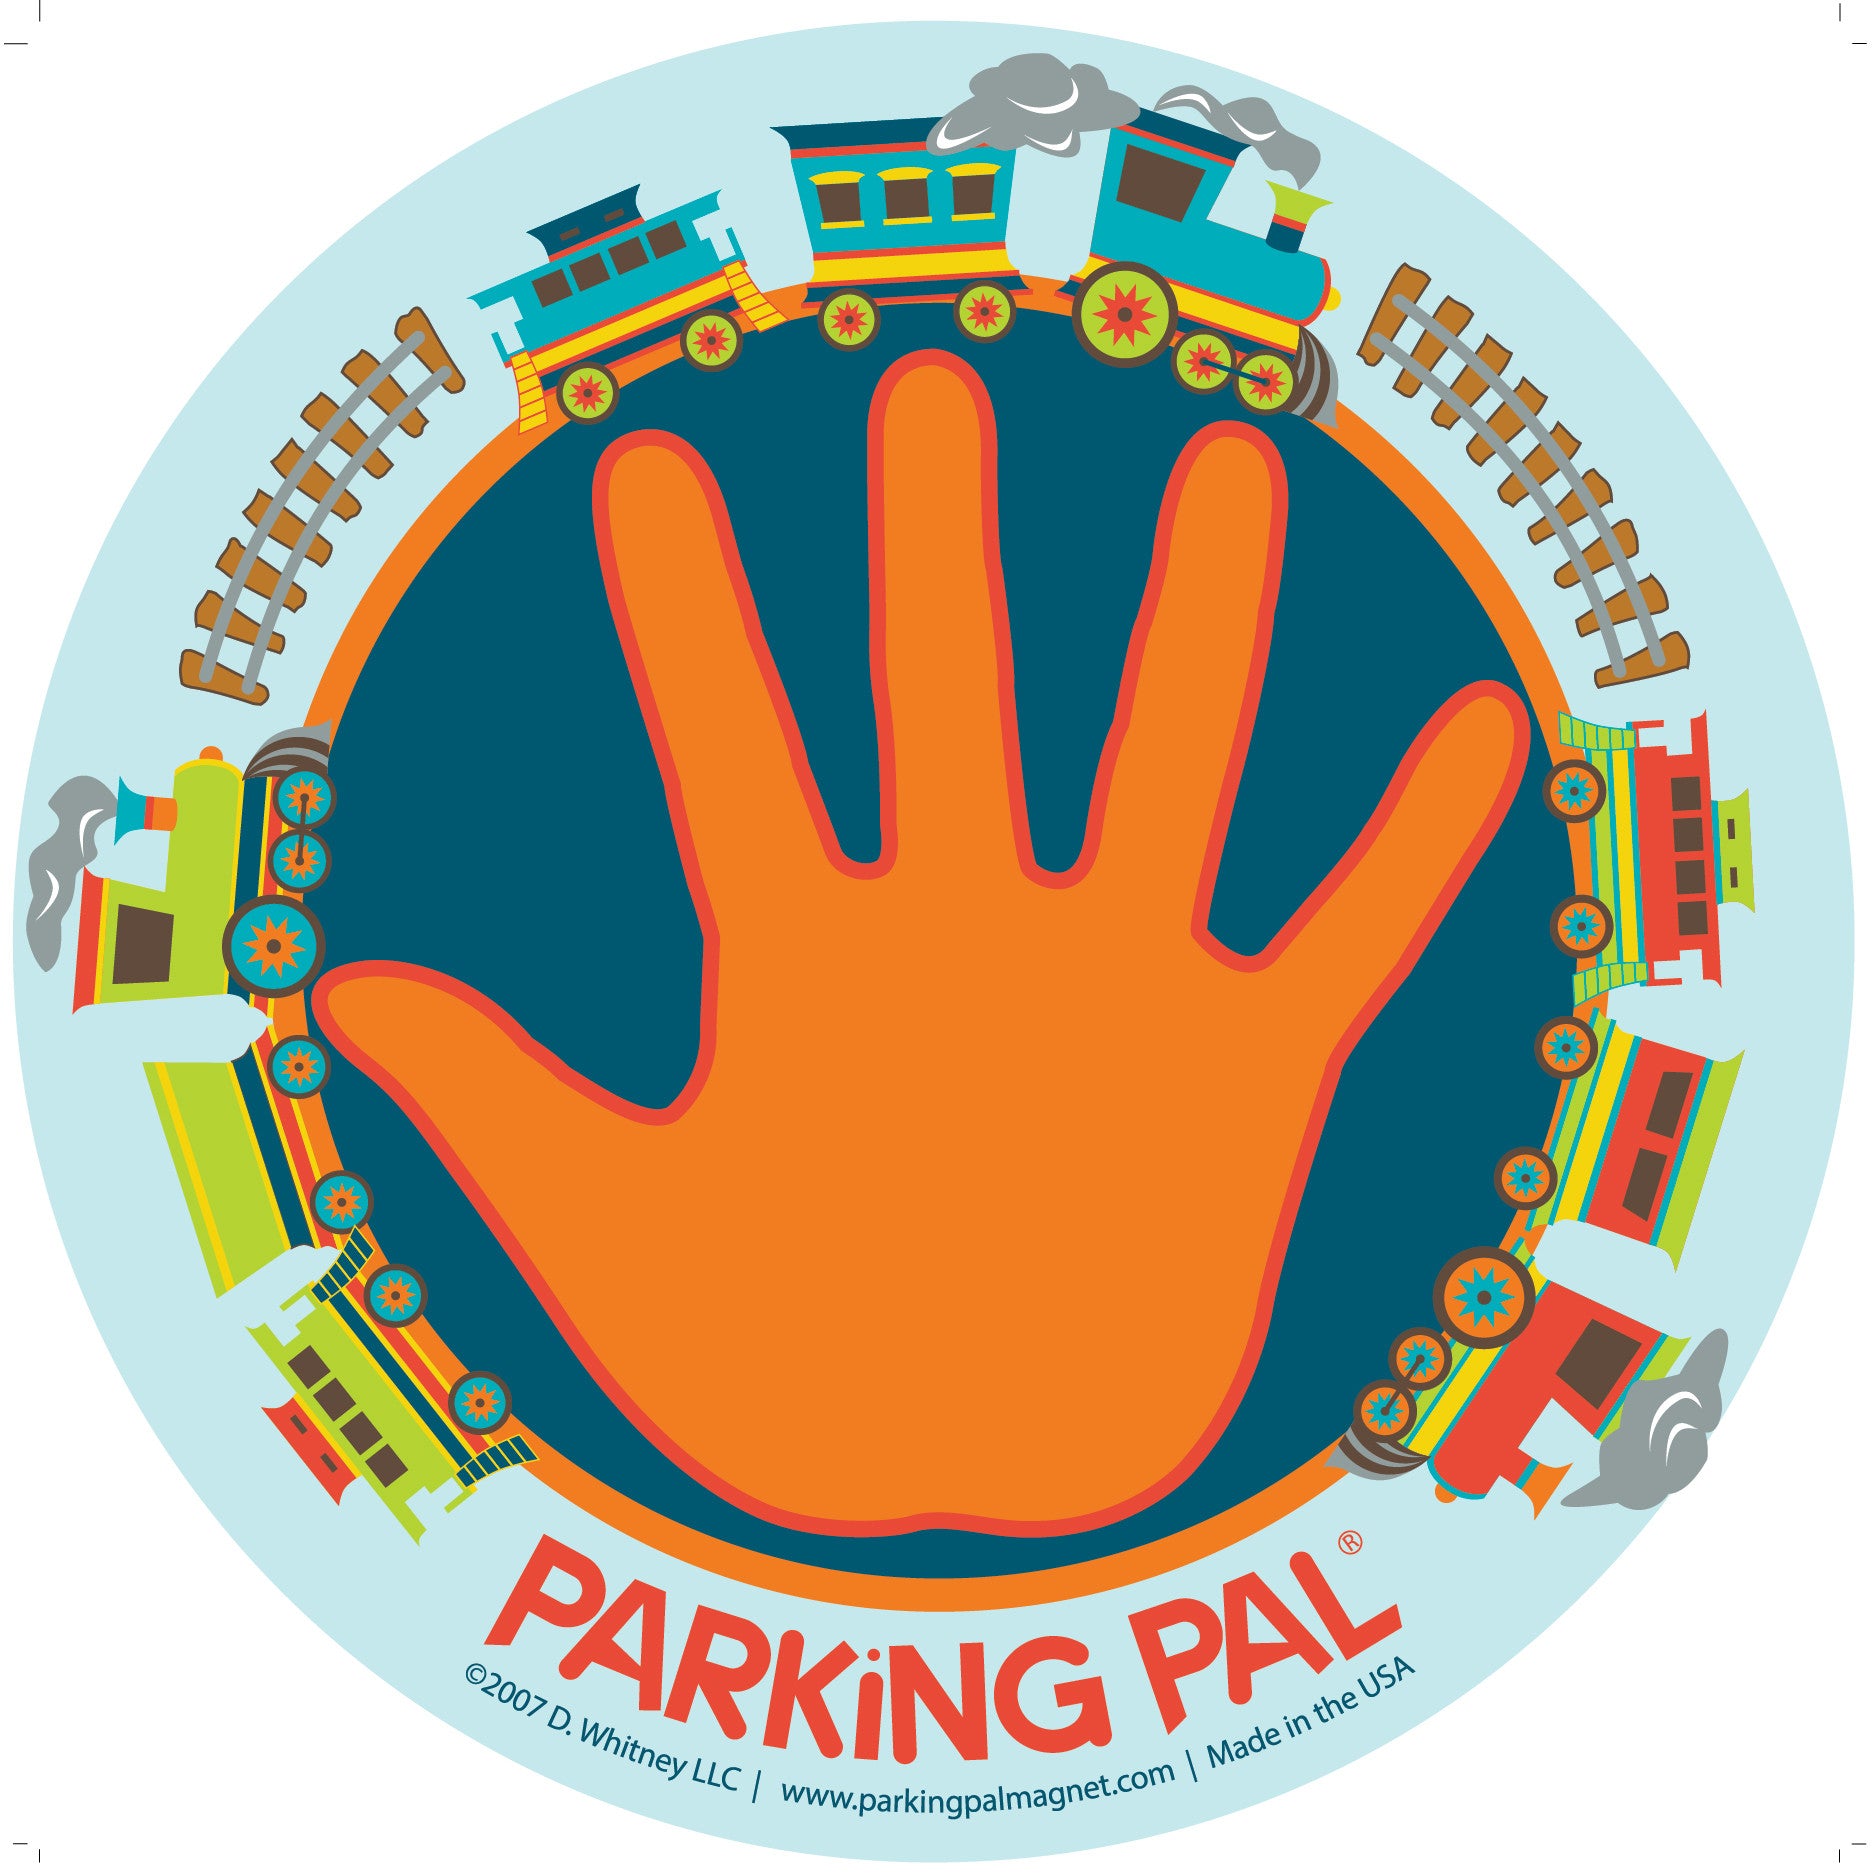 Train Parking Pal Car Magnet for Parking Lot Safety